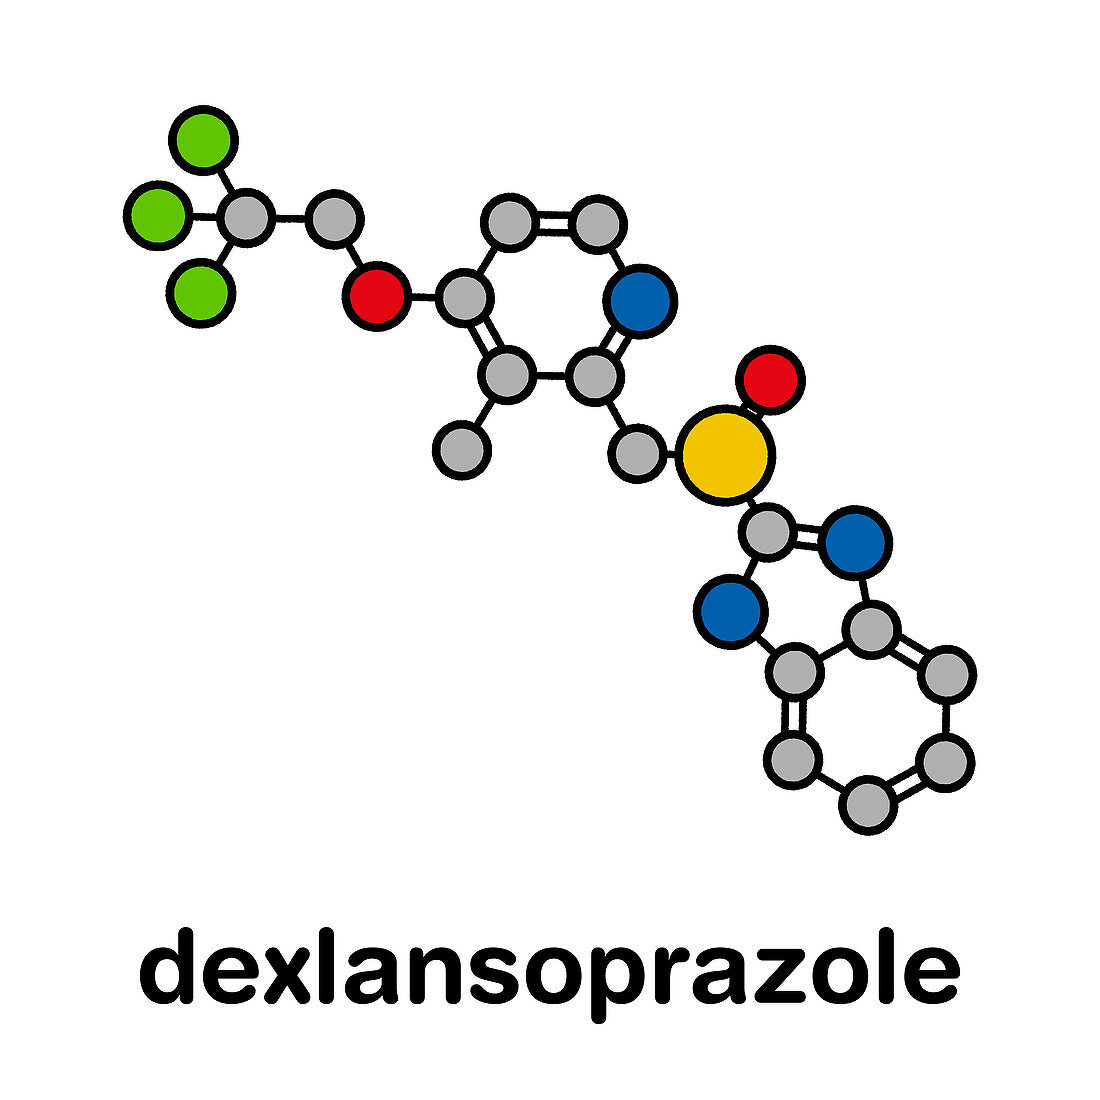 Dexlansoprazole gastric ulcer drug molecule, illustration